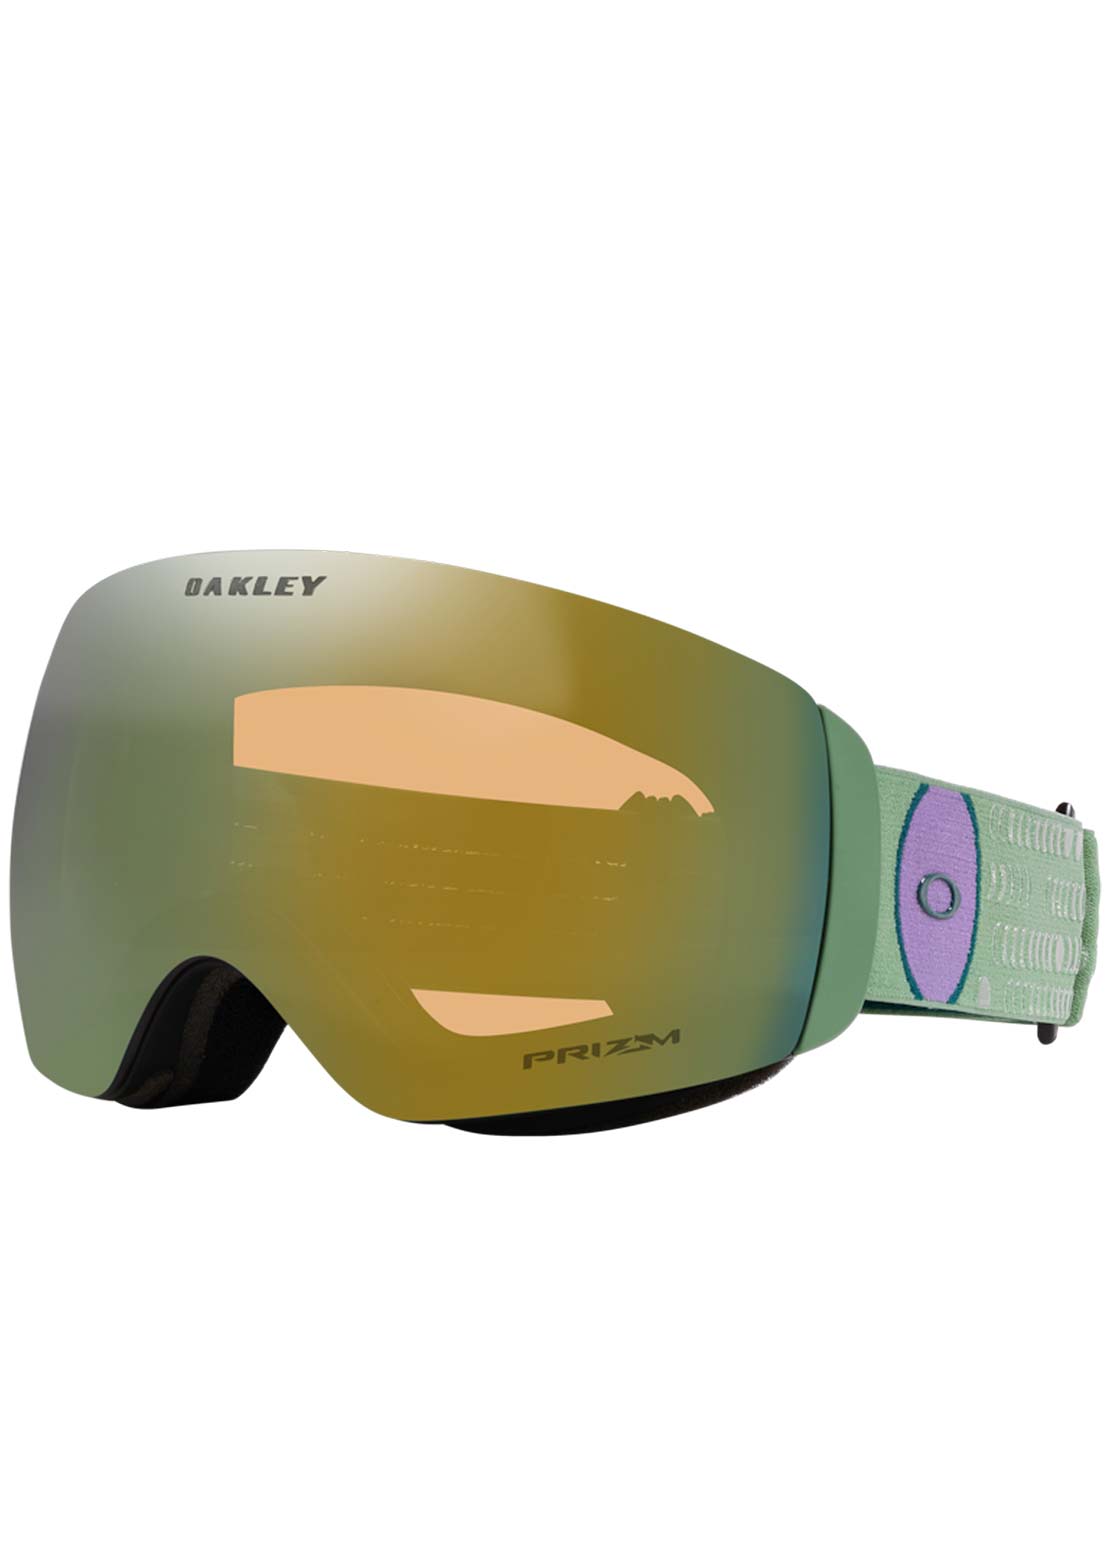 Oakley Flight Deck M Goggles Fraktel Jade/Prizm Sage Gold Iridium